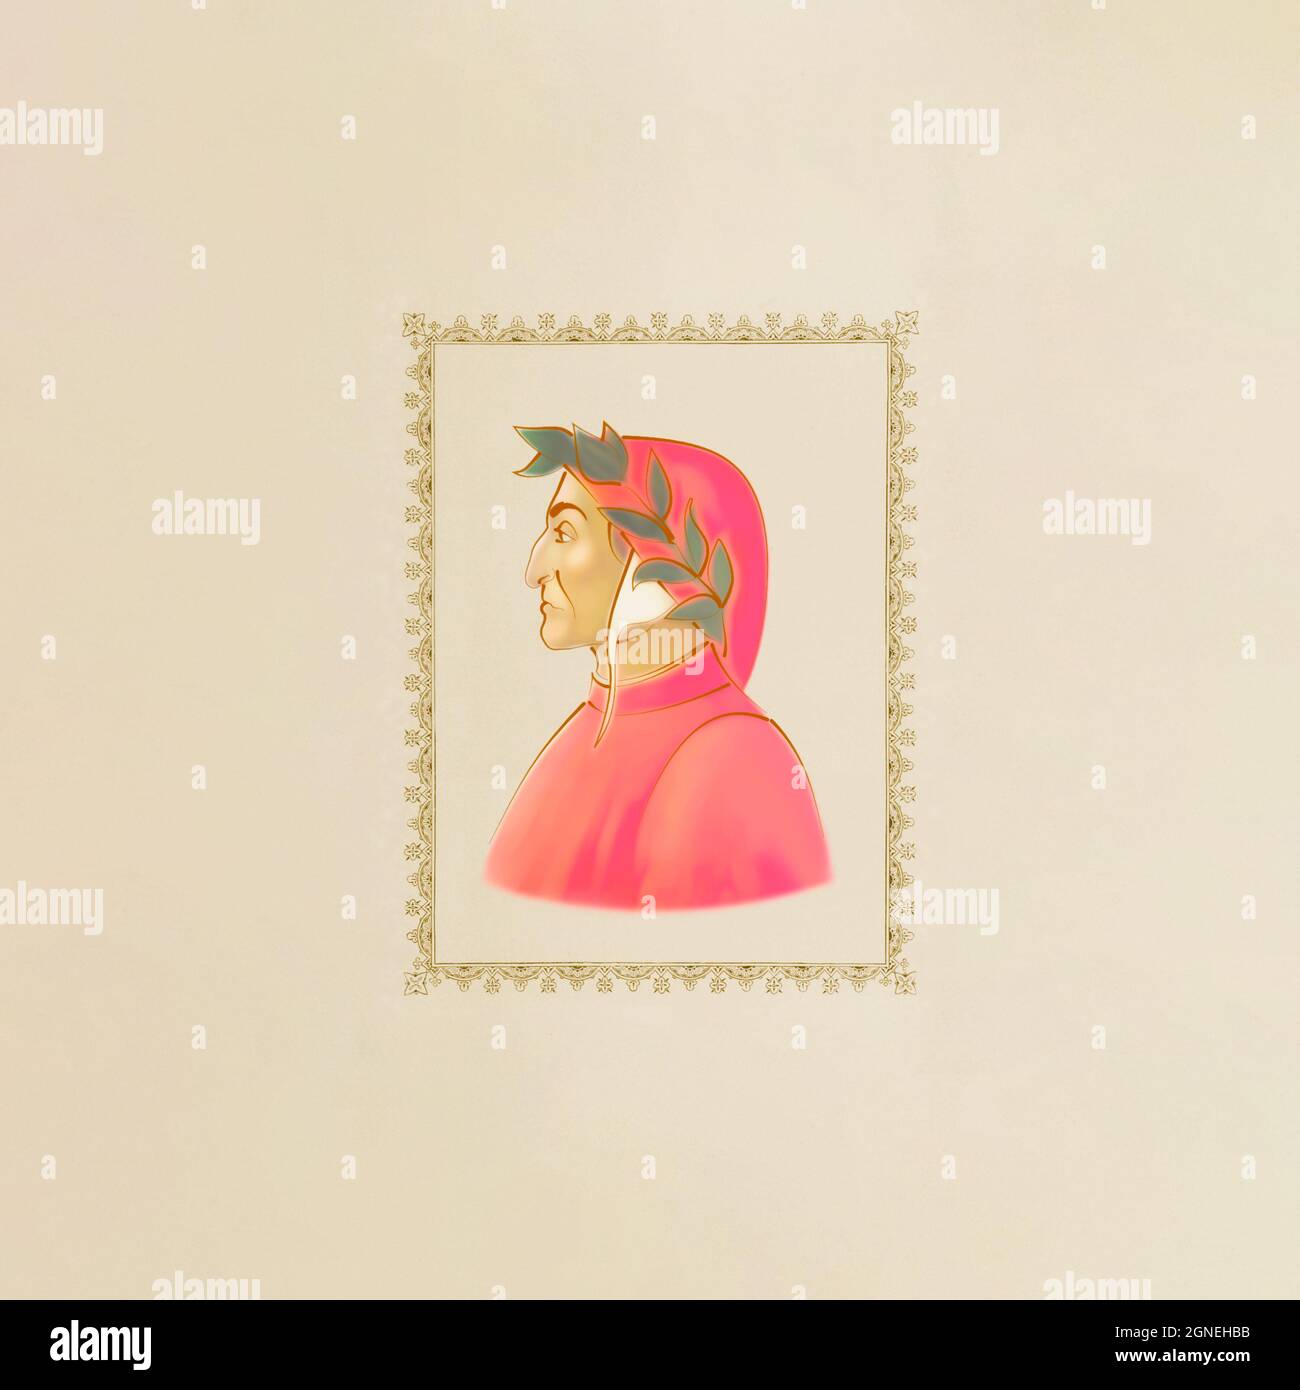 Dante Alighieri profile illustration portrait frame on cream plastered wall background Stock Photo